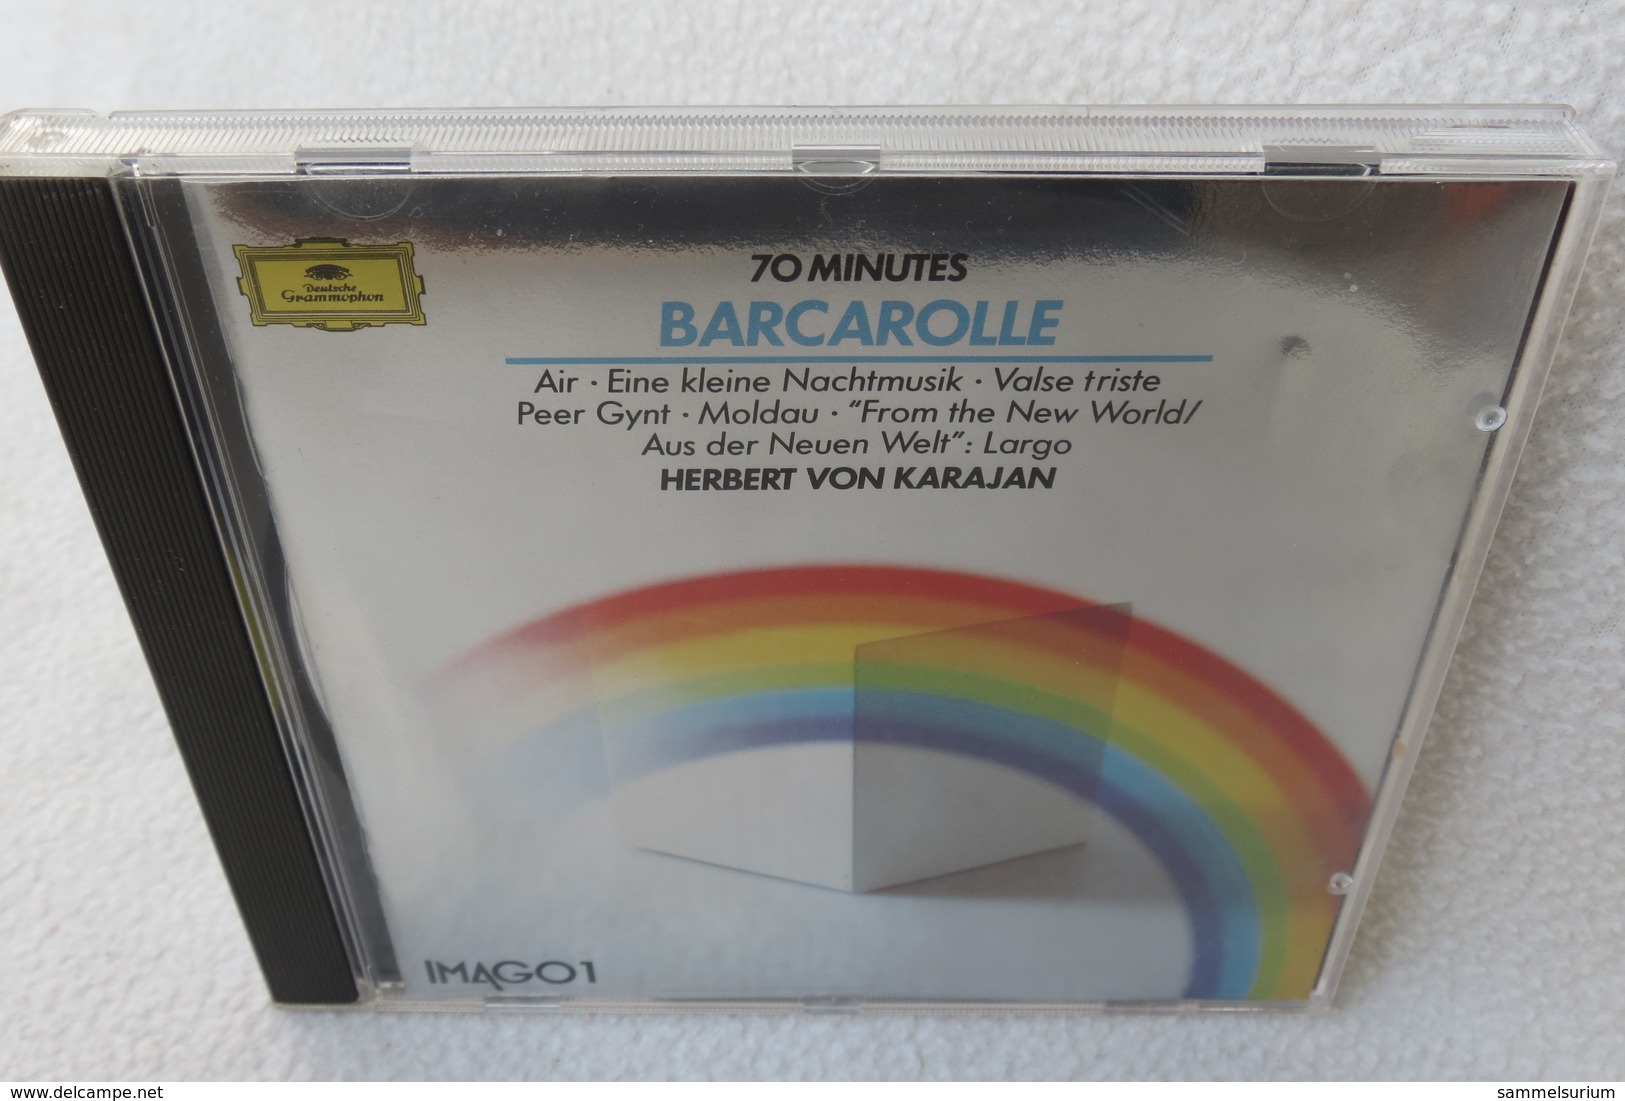 CD "Barcarolle" Imago 1, Herbert Von Karajan - Klassik